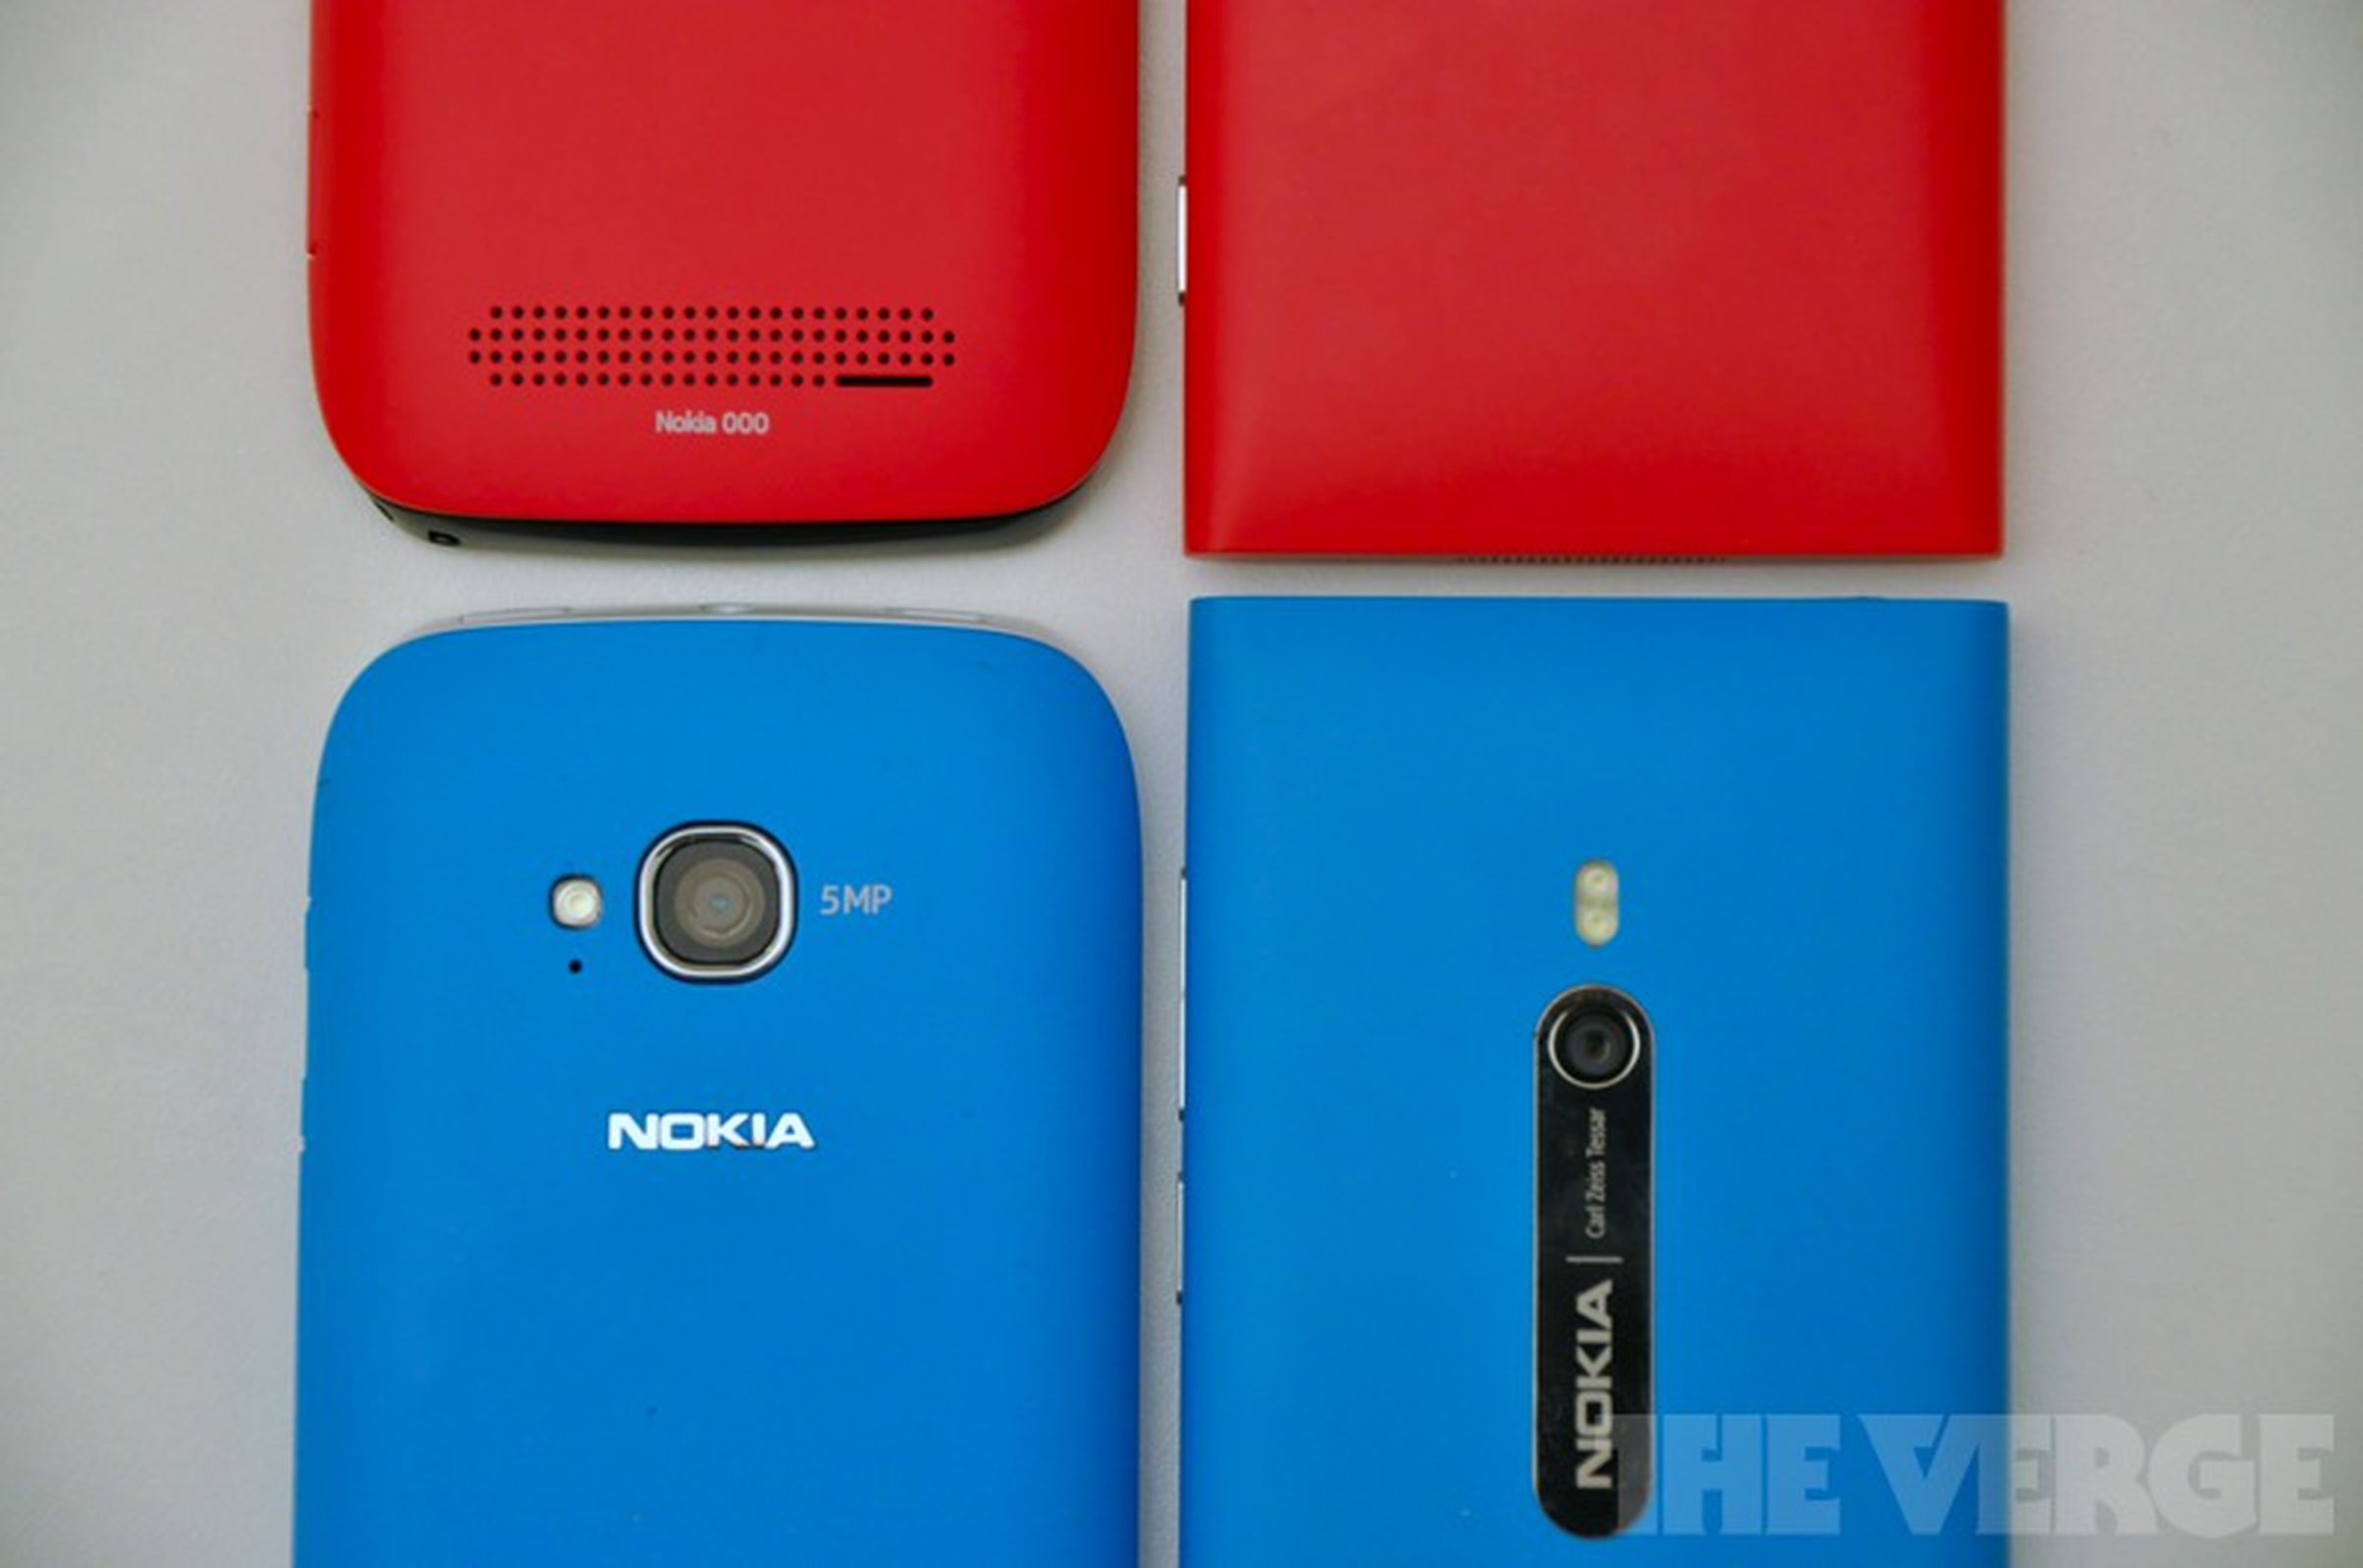 Nokia Lumia 800 and Lumia 710 side by side photos